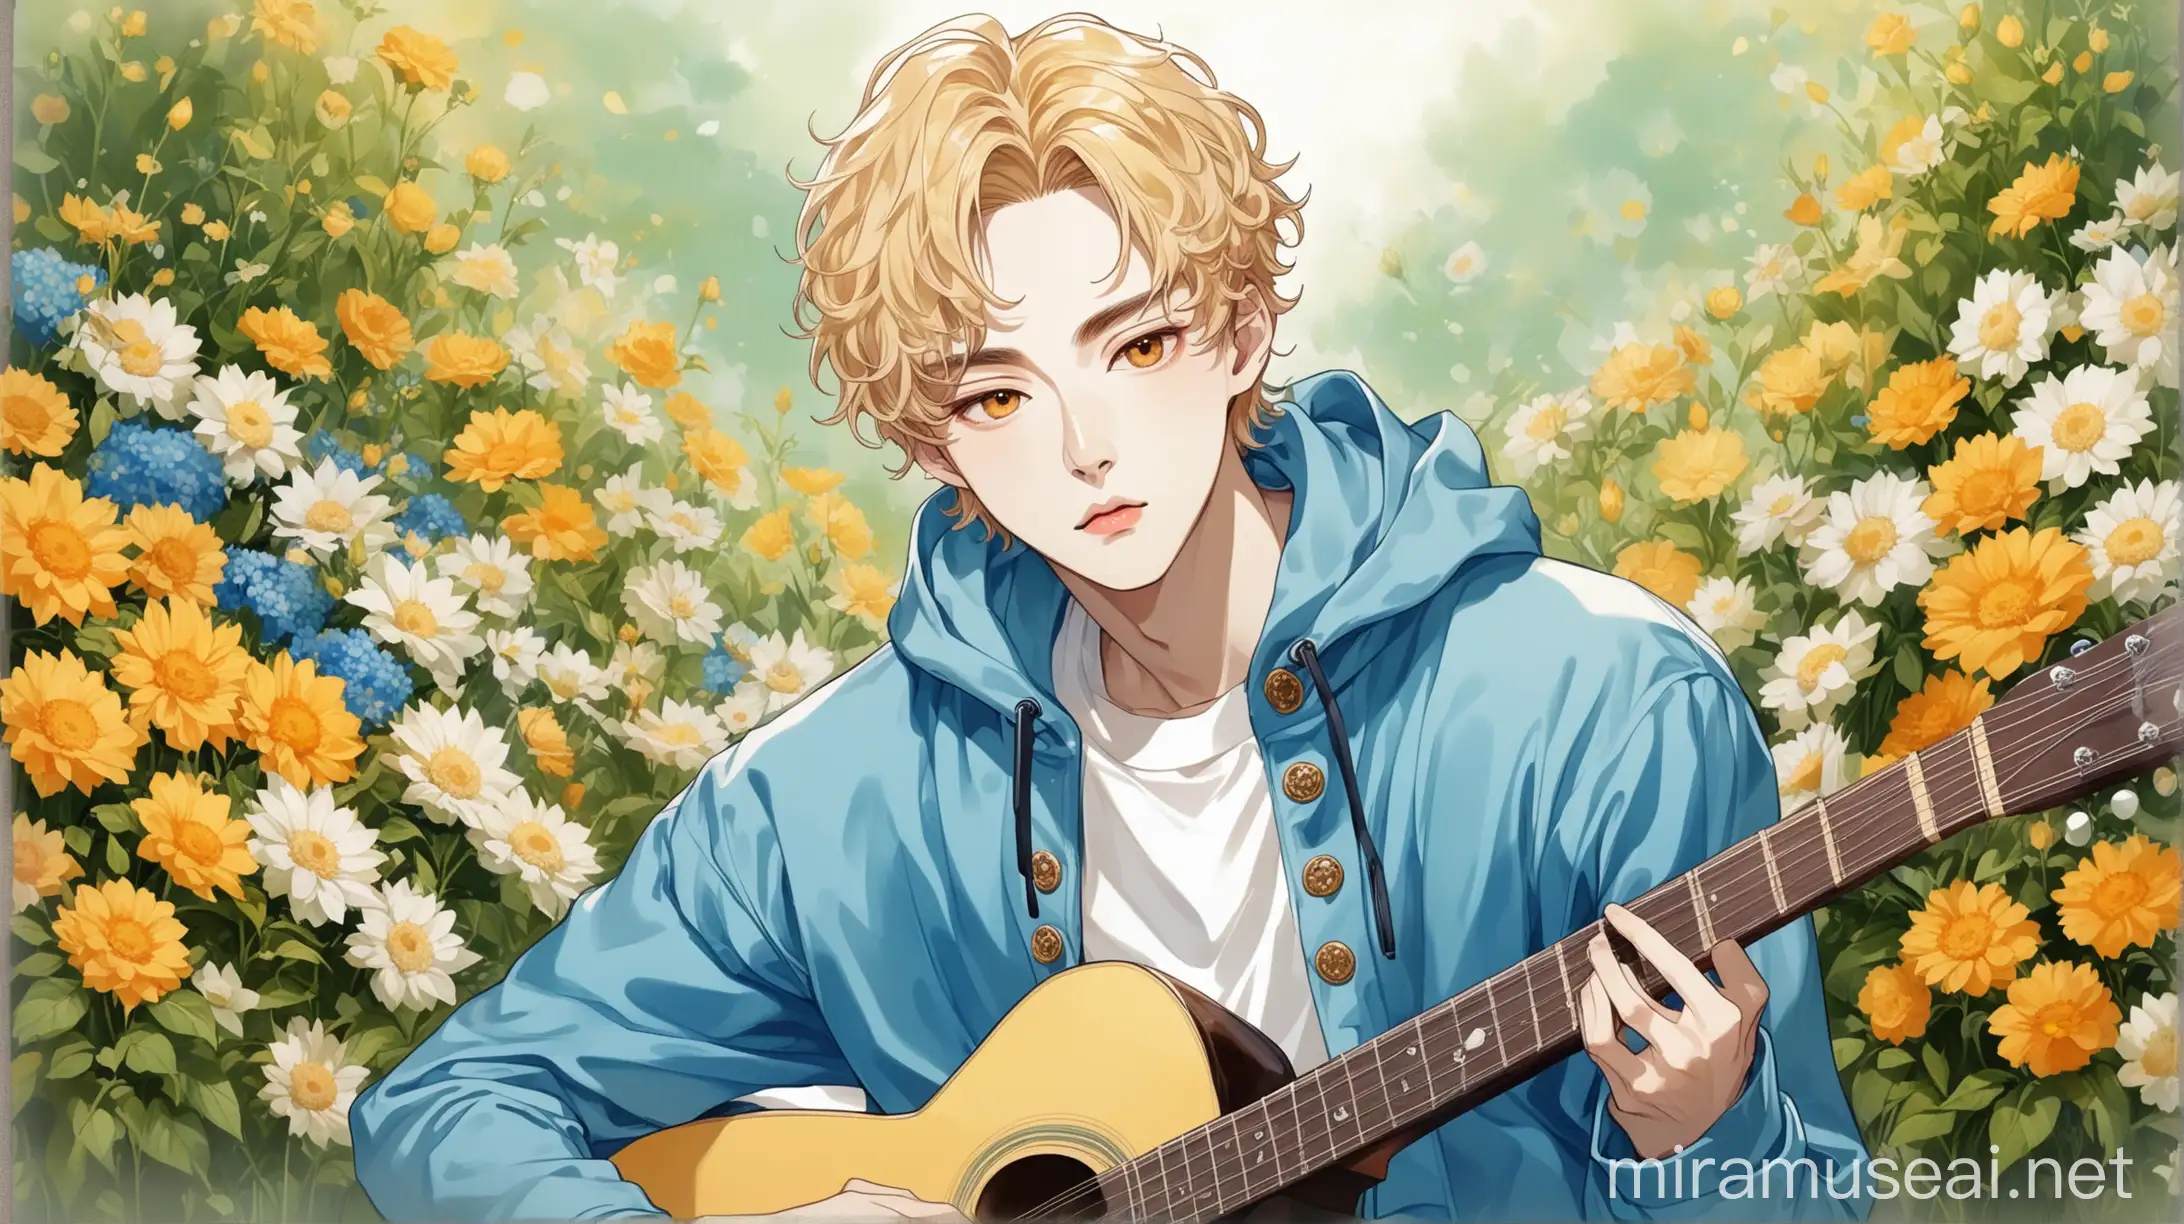 Korean Kpop Idol Singing with Guitar in Beautiful Flower Garden